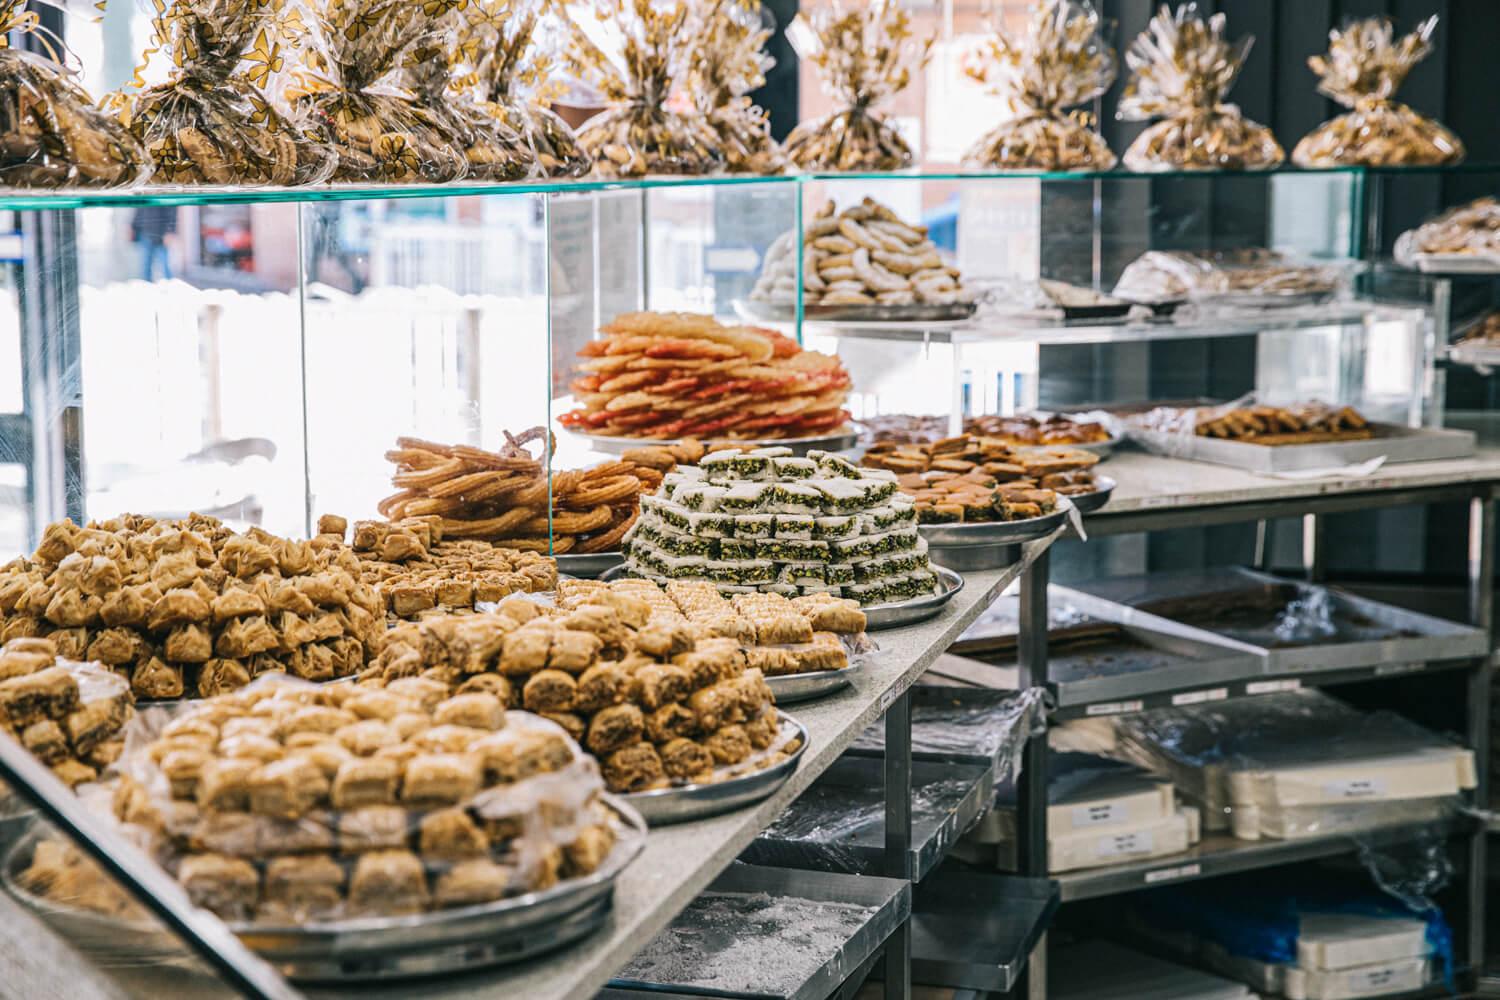 Lebanese Pastries in Shop Window